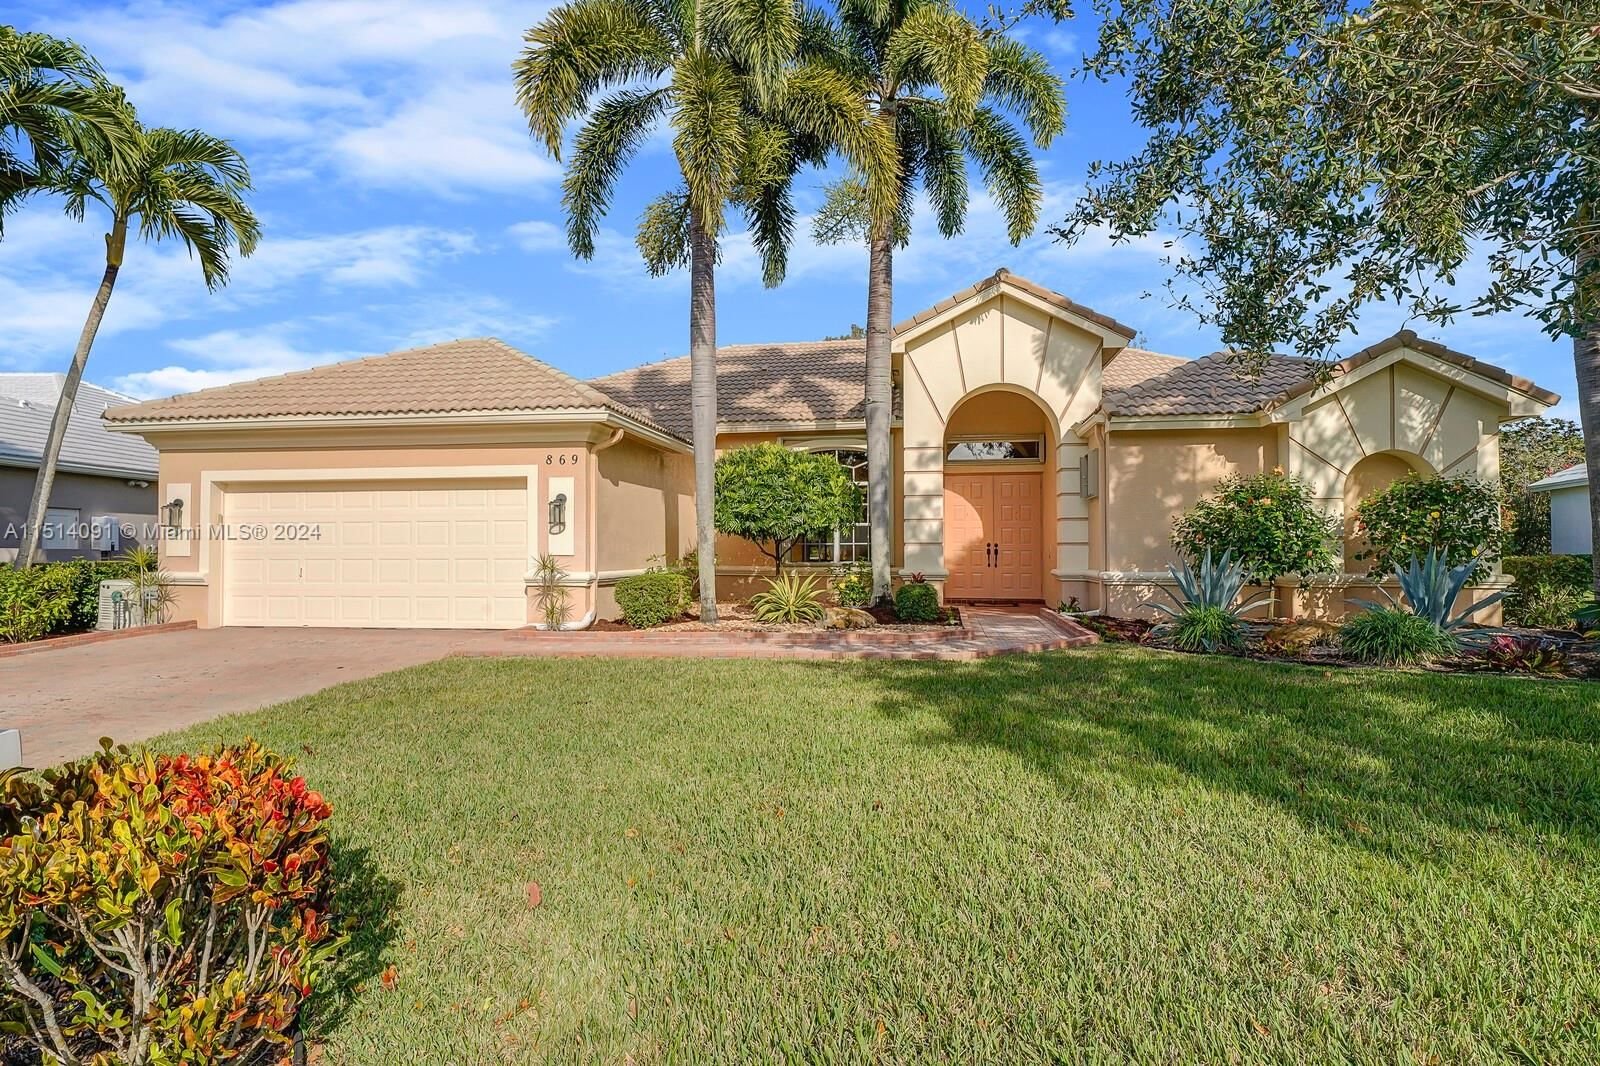 Real estate property located at 869 Blue Stem Way, Martin County, FLORIDA CLUB, Stuart, FL